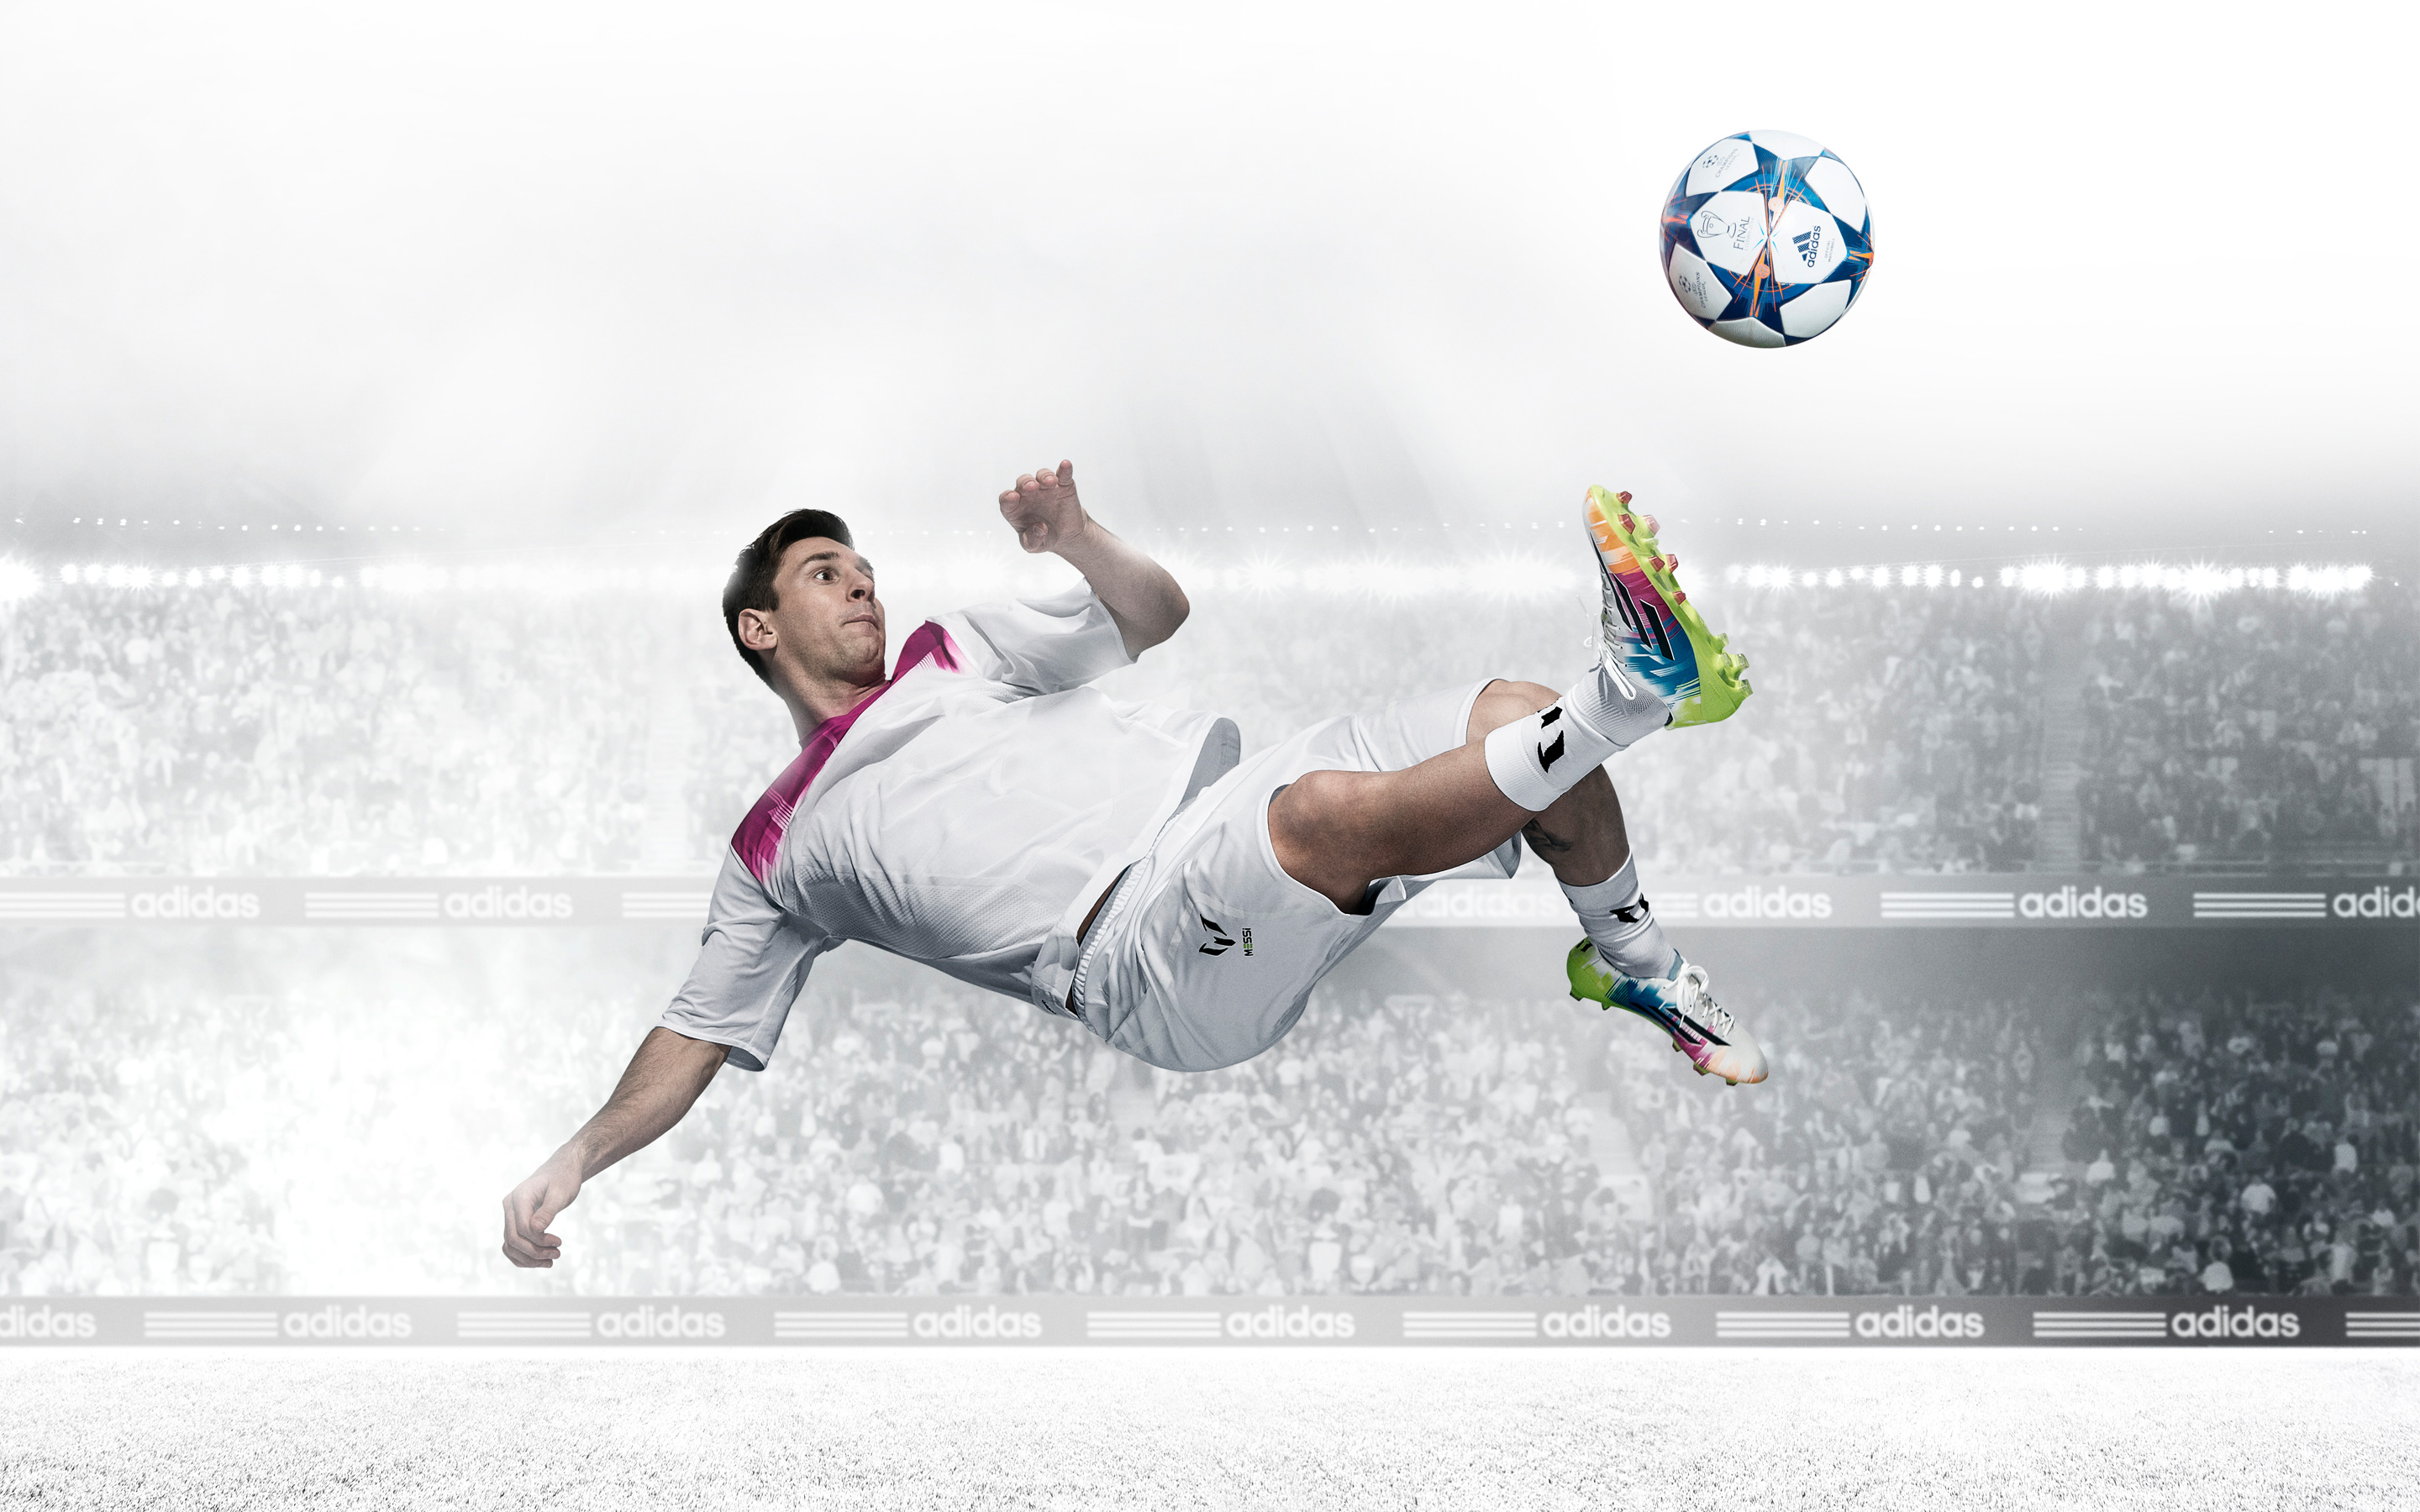 Wallpaper 4k Lionel Messi Soccer Football Wallpaper